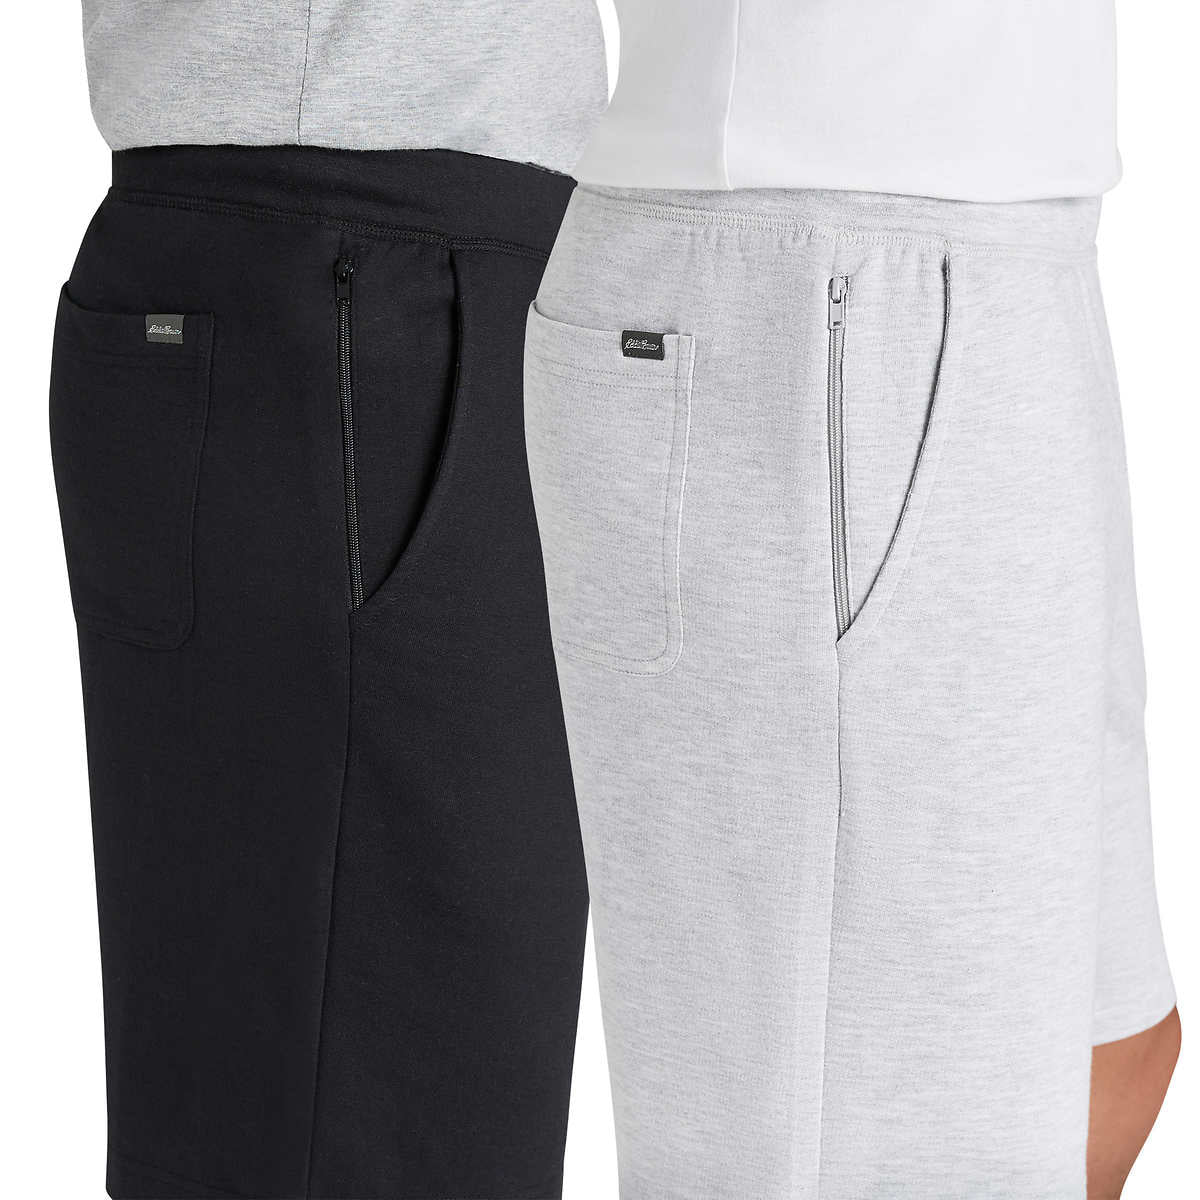 Eddie Bauer Men’s 2-pack Lightweight Cotton Blend Jersey Active Casual Shorts